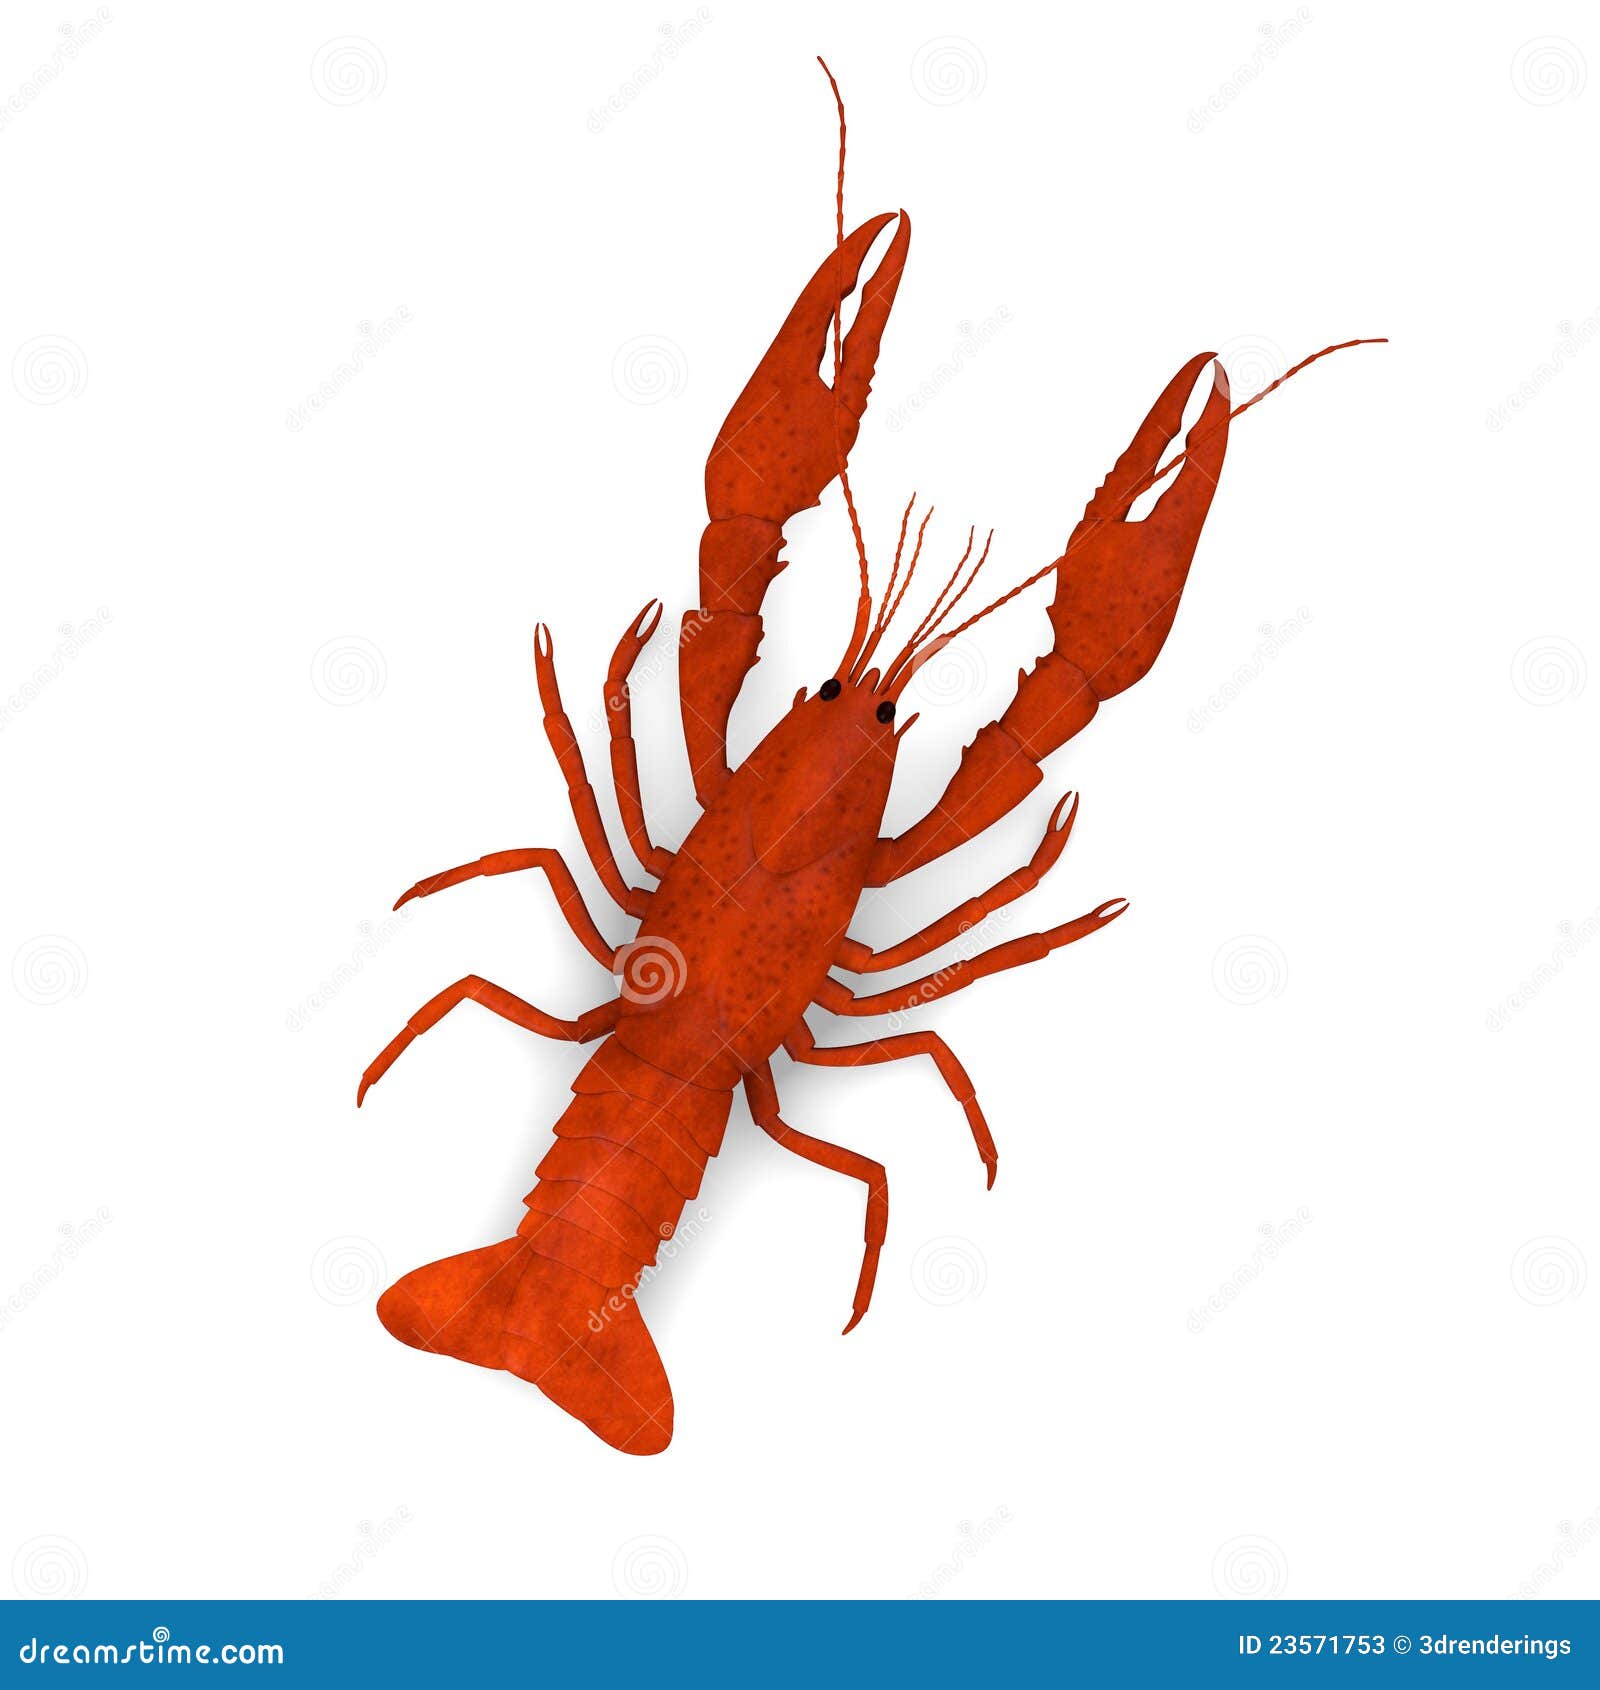 Dead red crayfish stock illustration. Illustration of ...